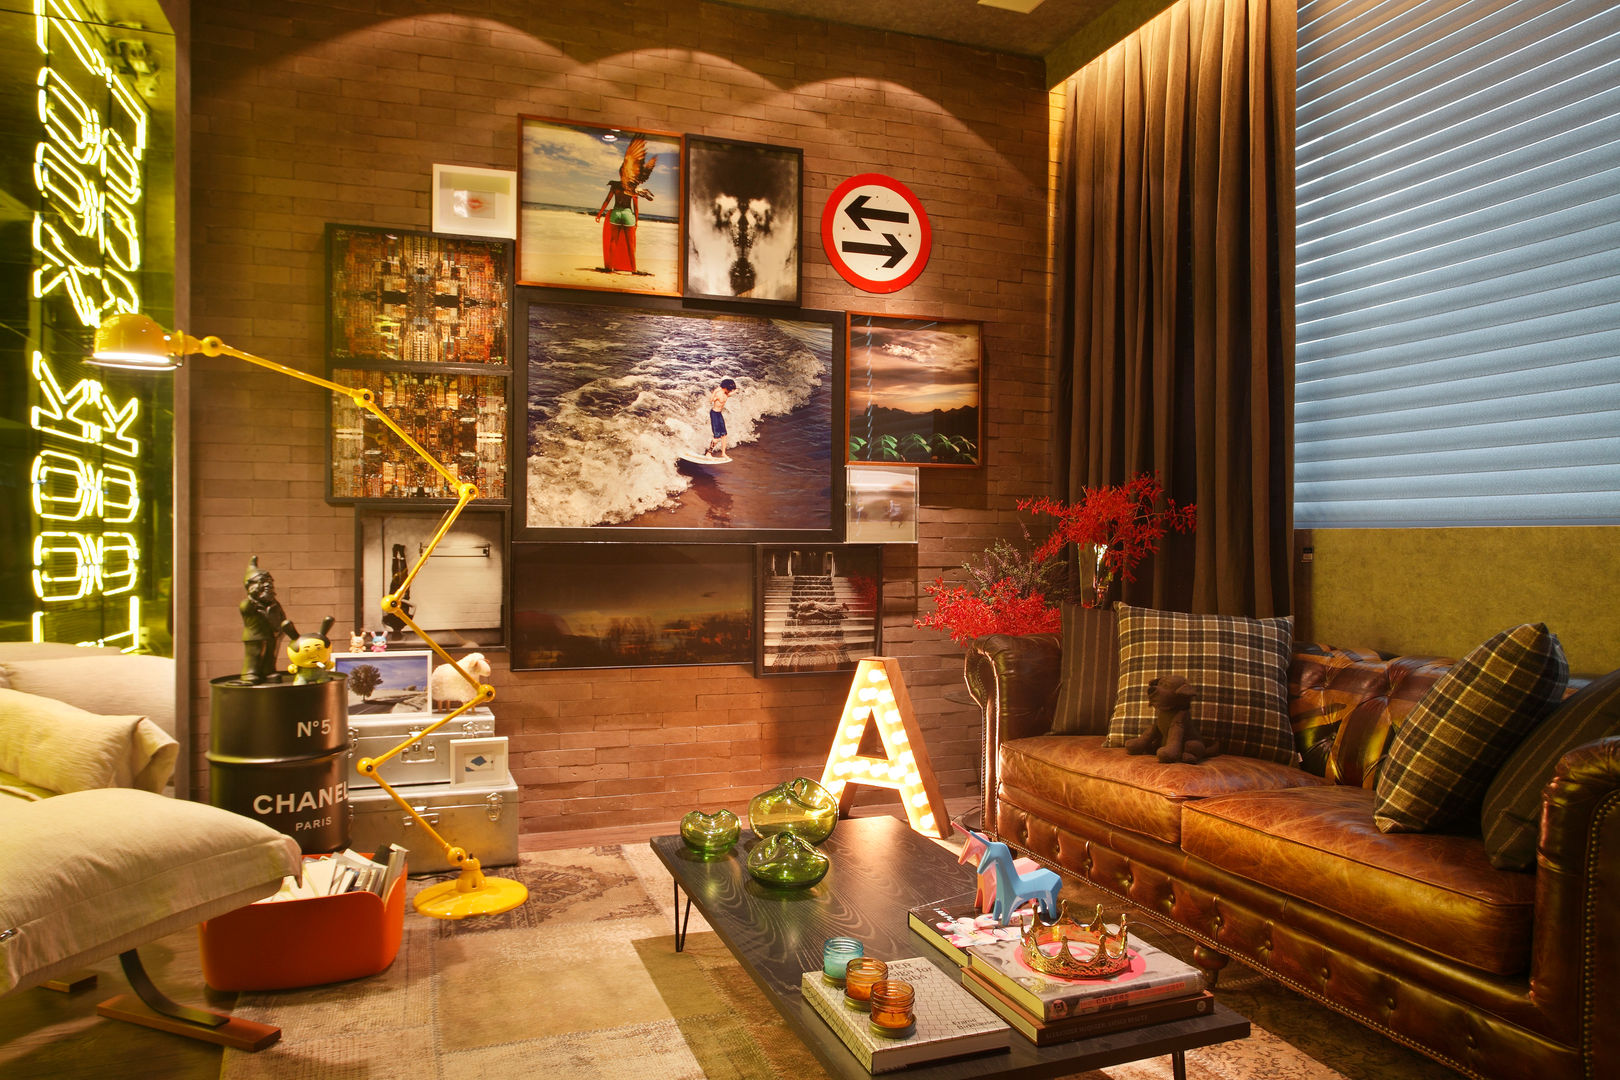 Casa Cor RJ - 2014, Studio ro+ca Studio ro+ca Industrial style living room